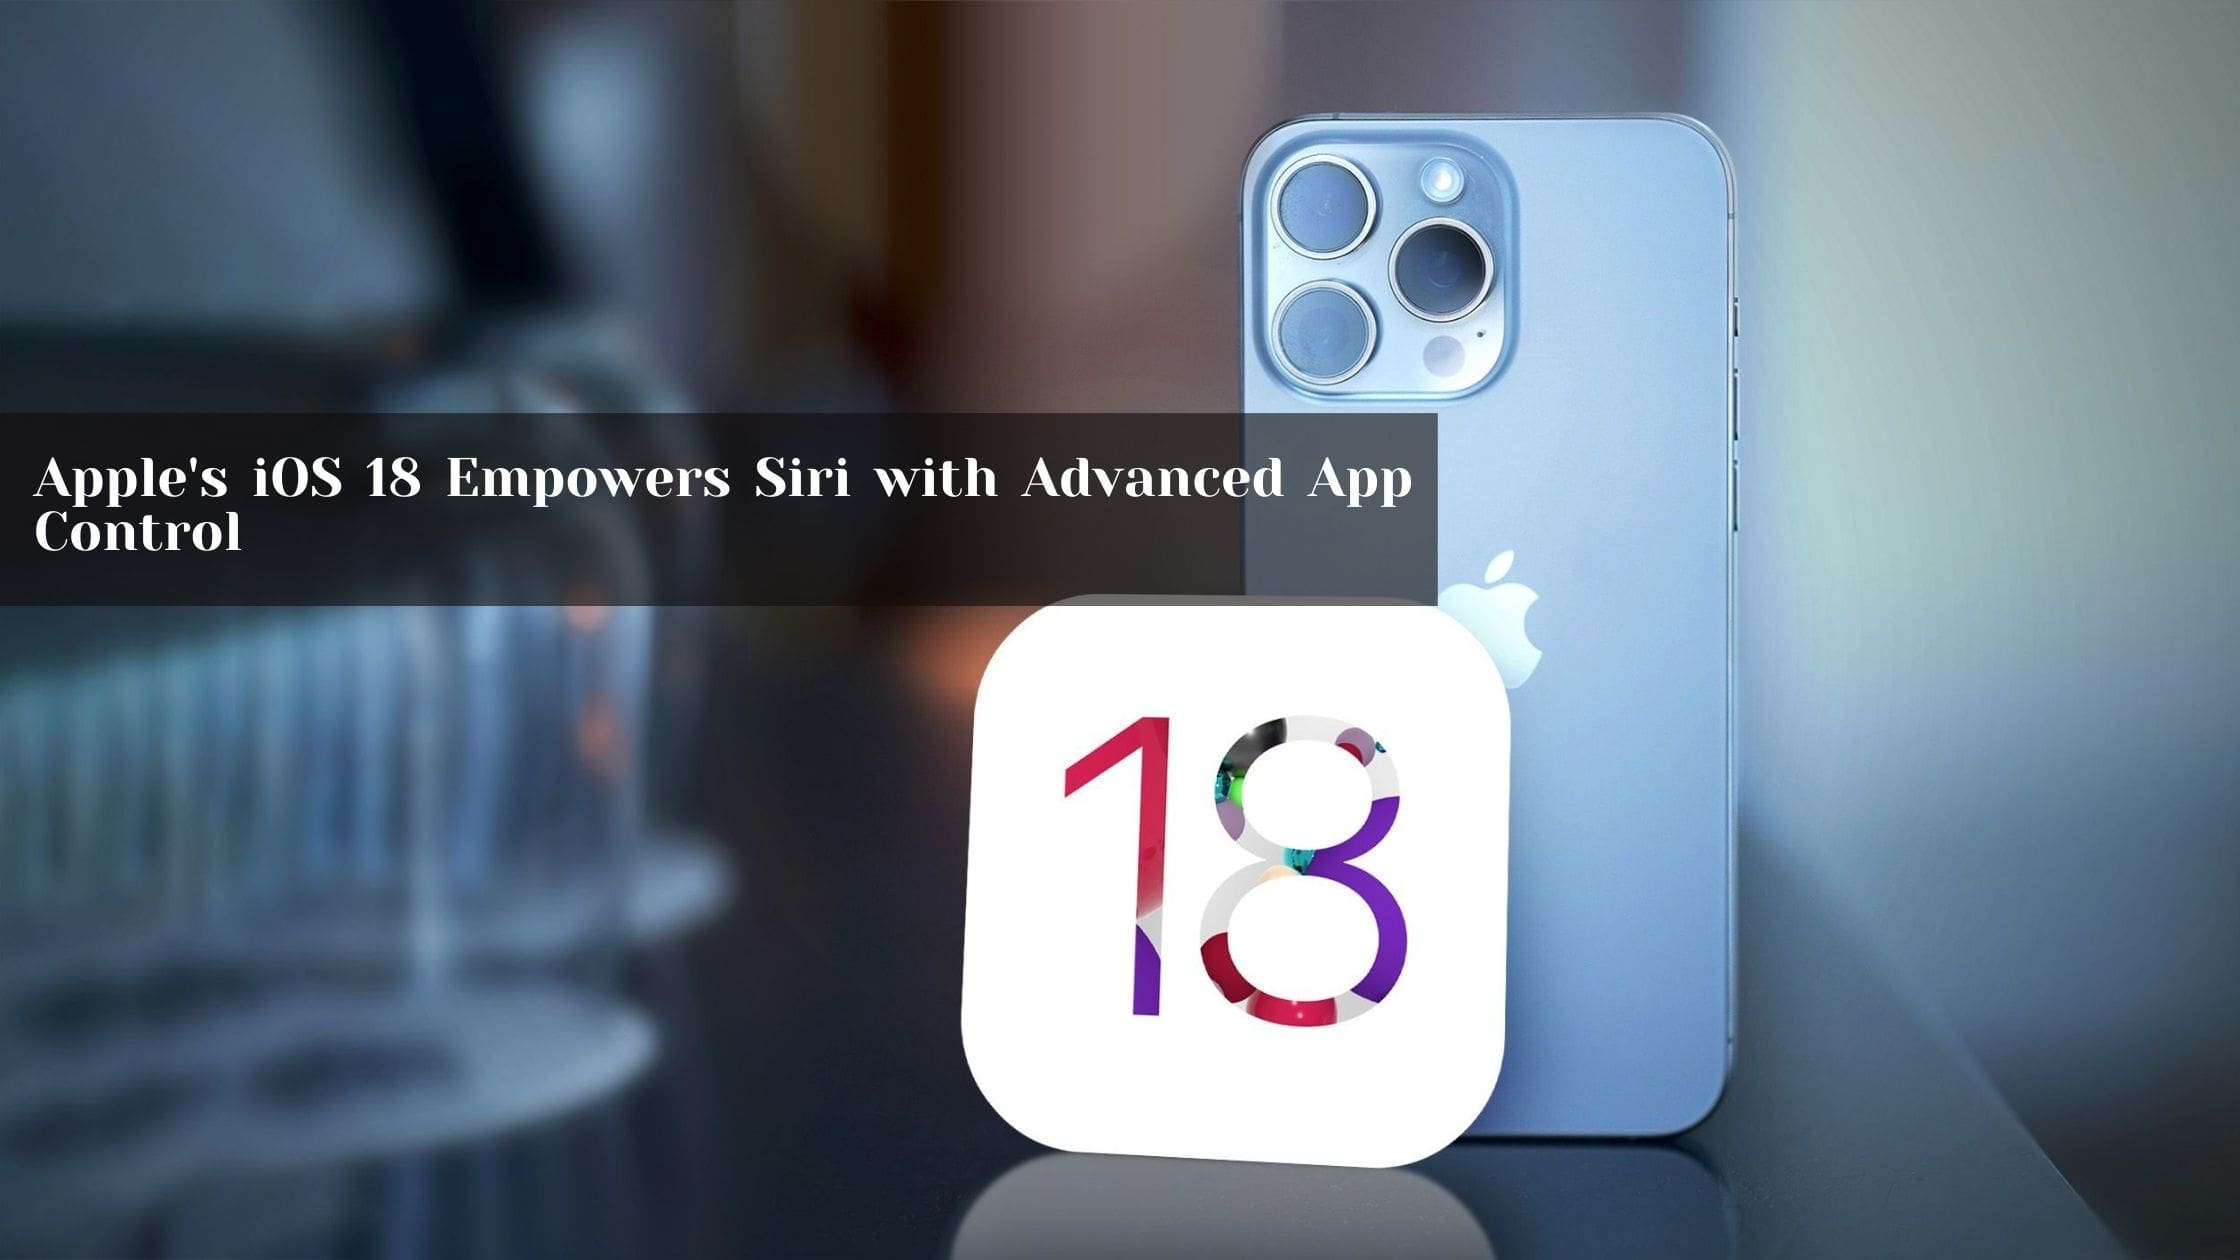 Apple's iOS 18 Empowers Siri with Advanced App Control